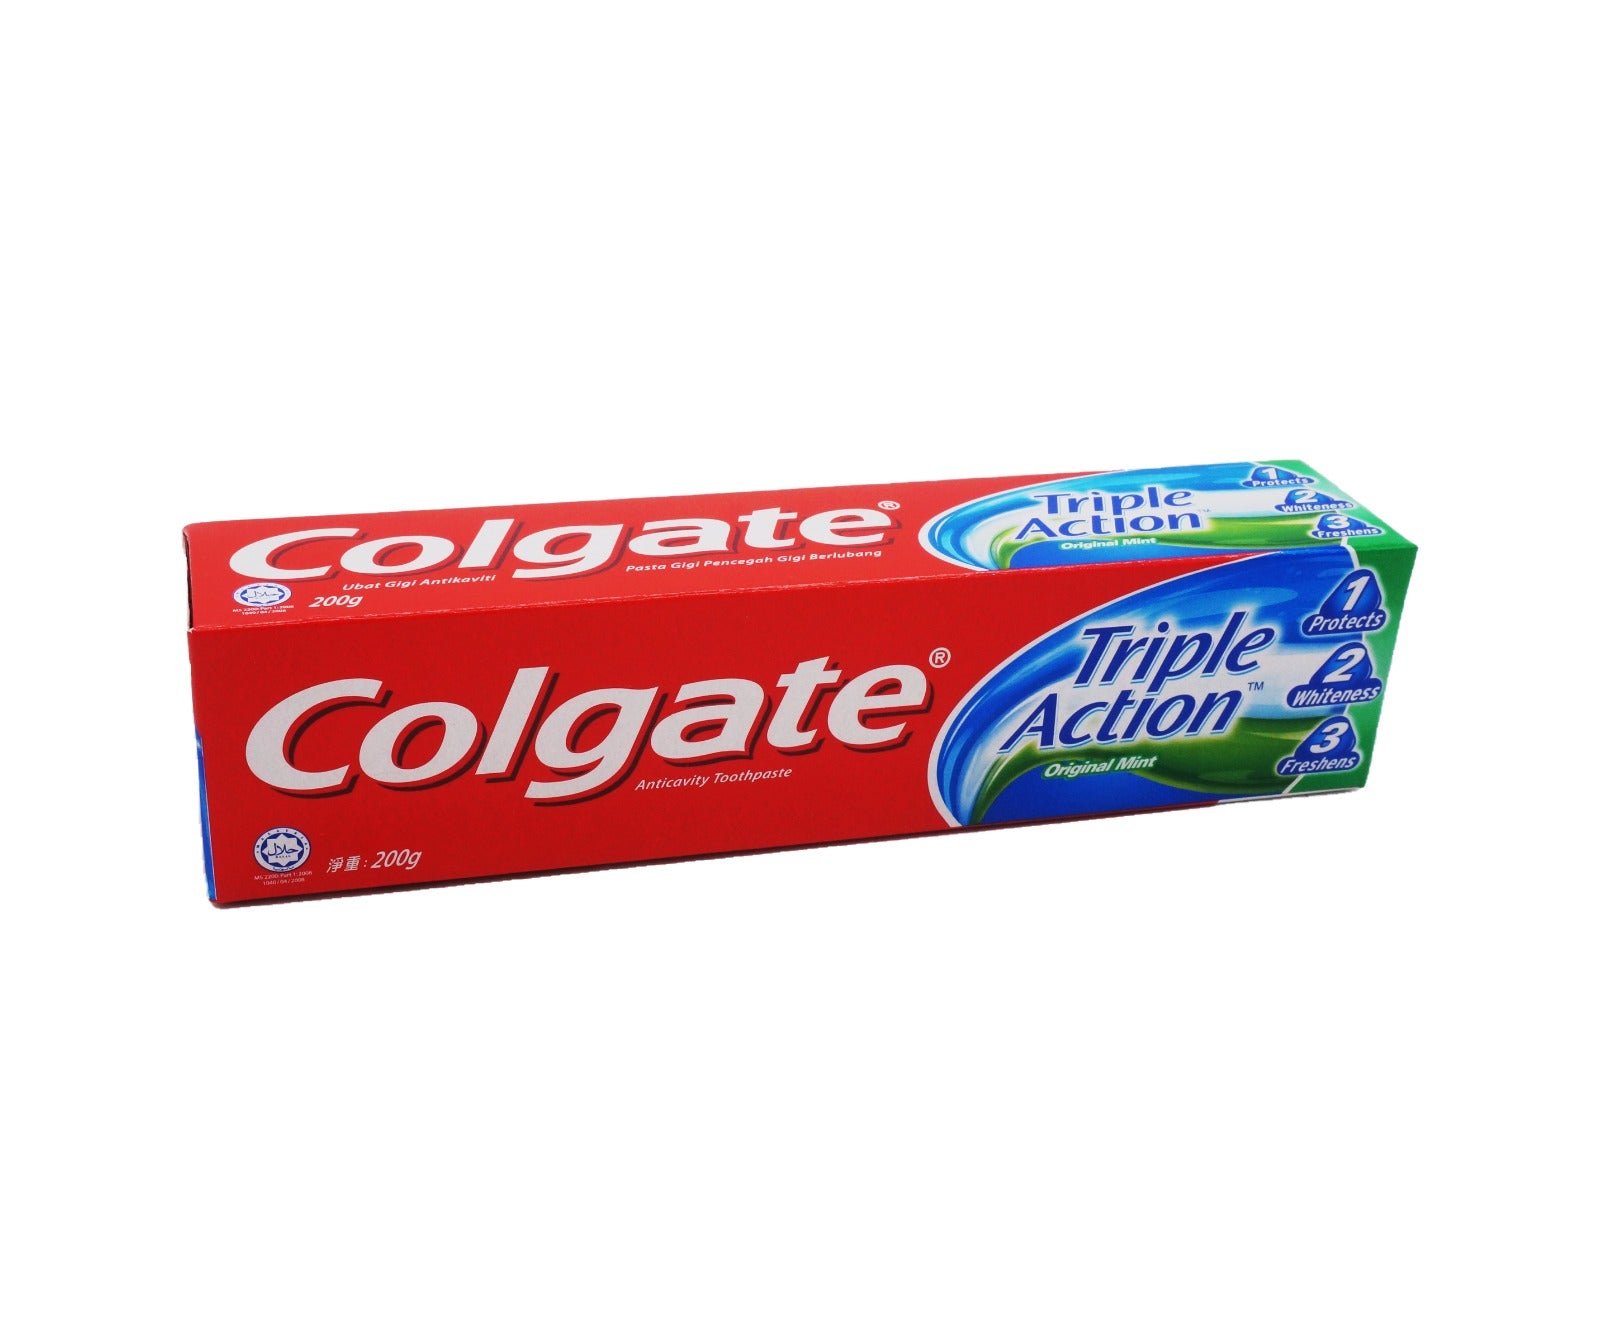 Colgate Triple Action Toothpaste (200g – Piece)